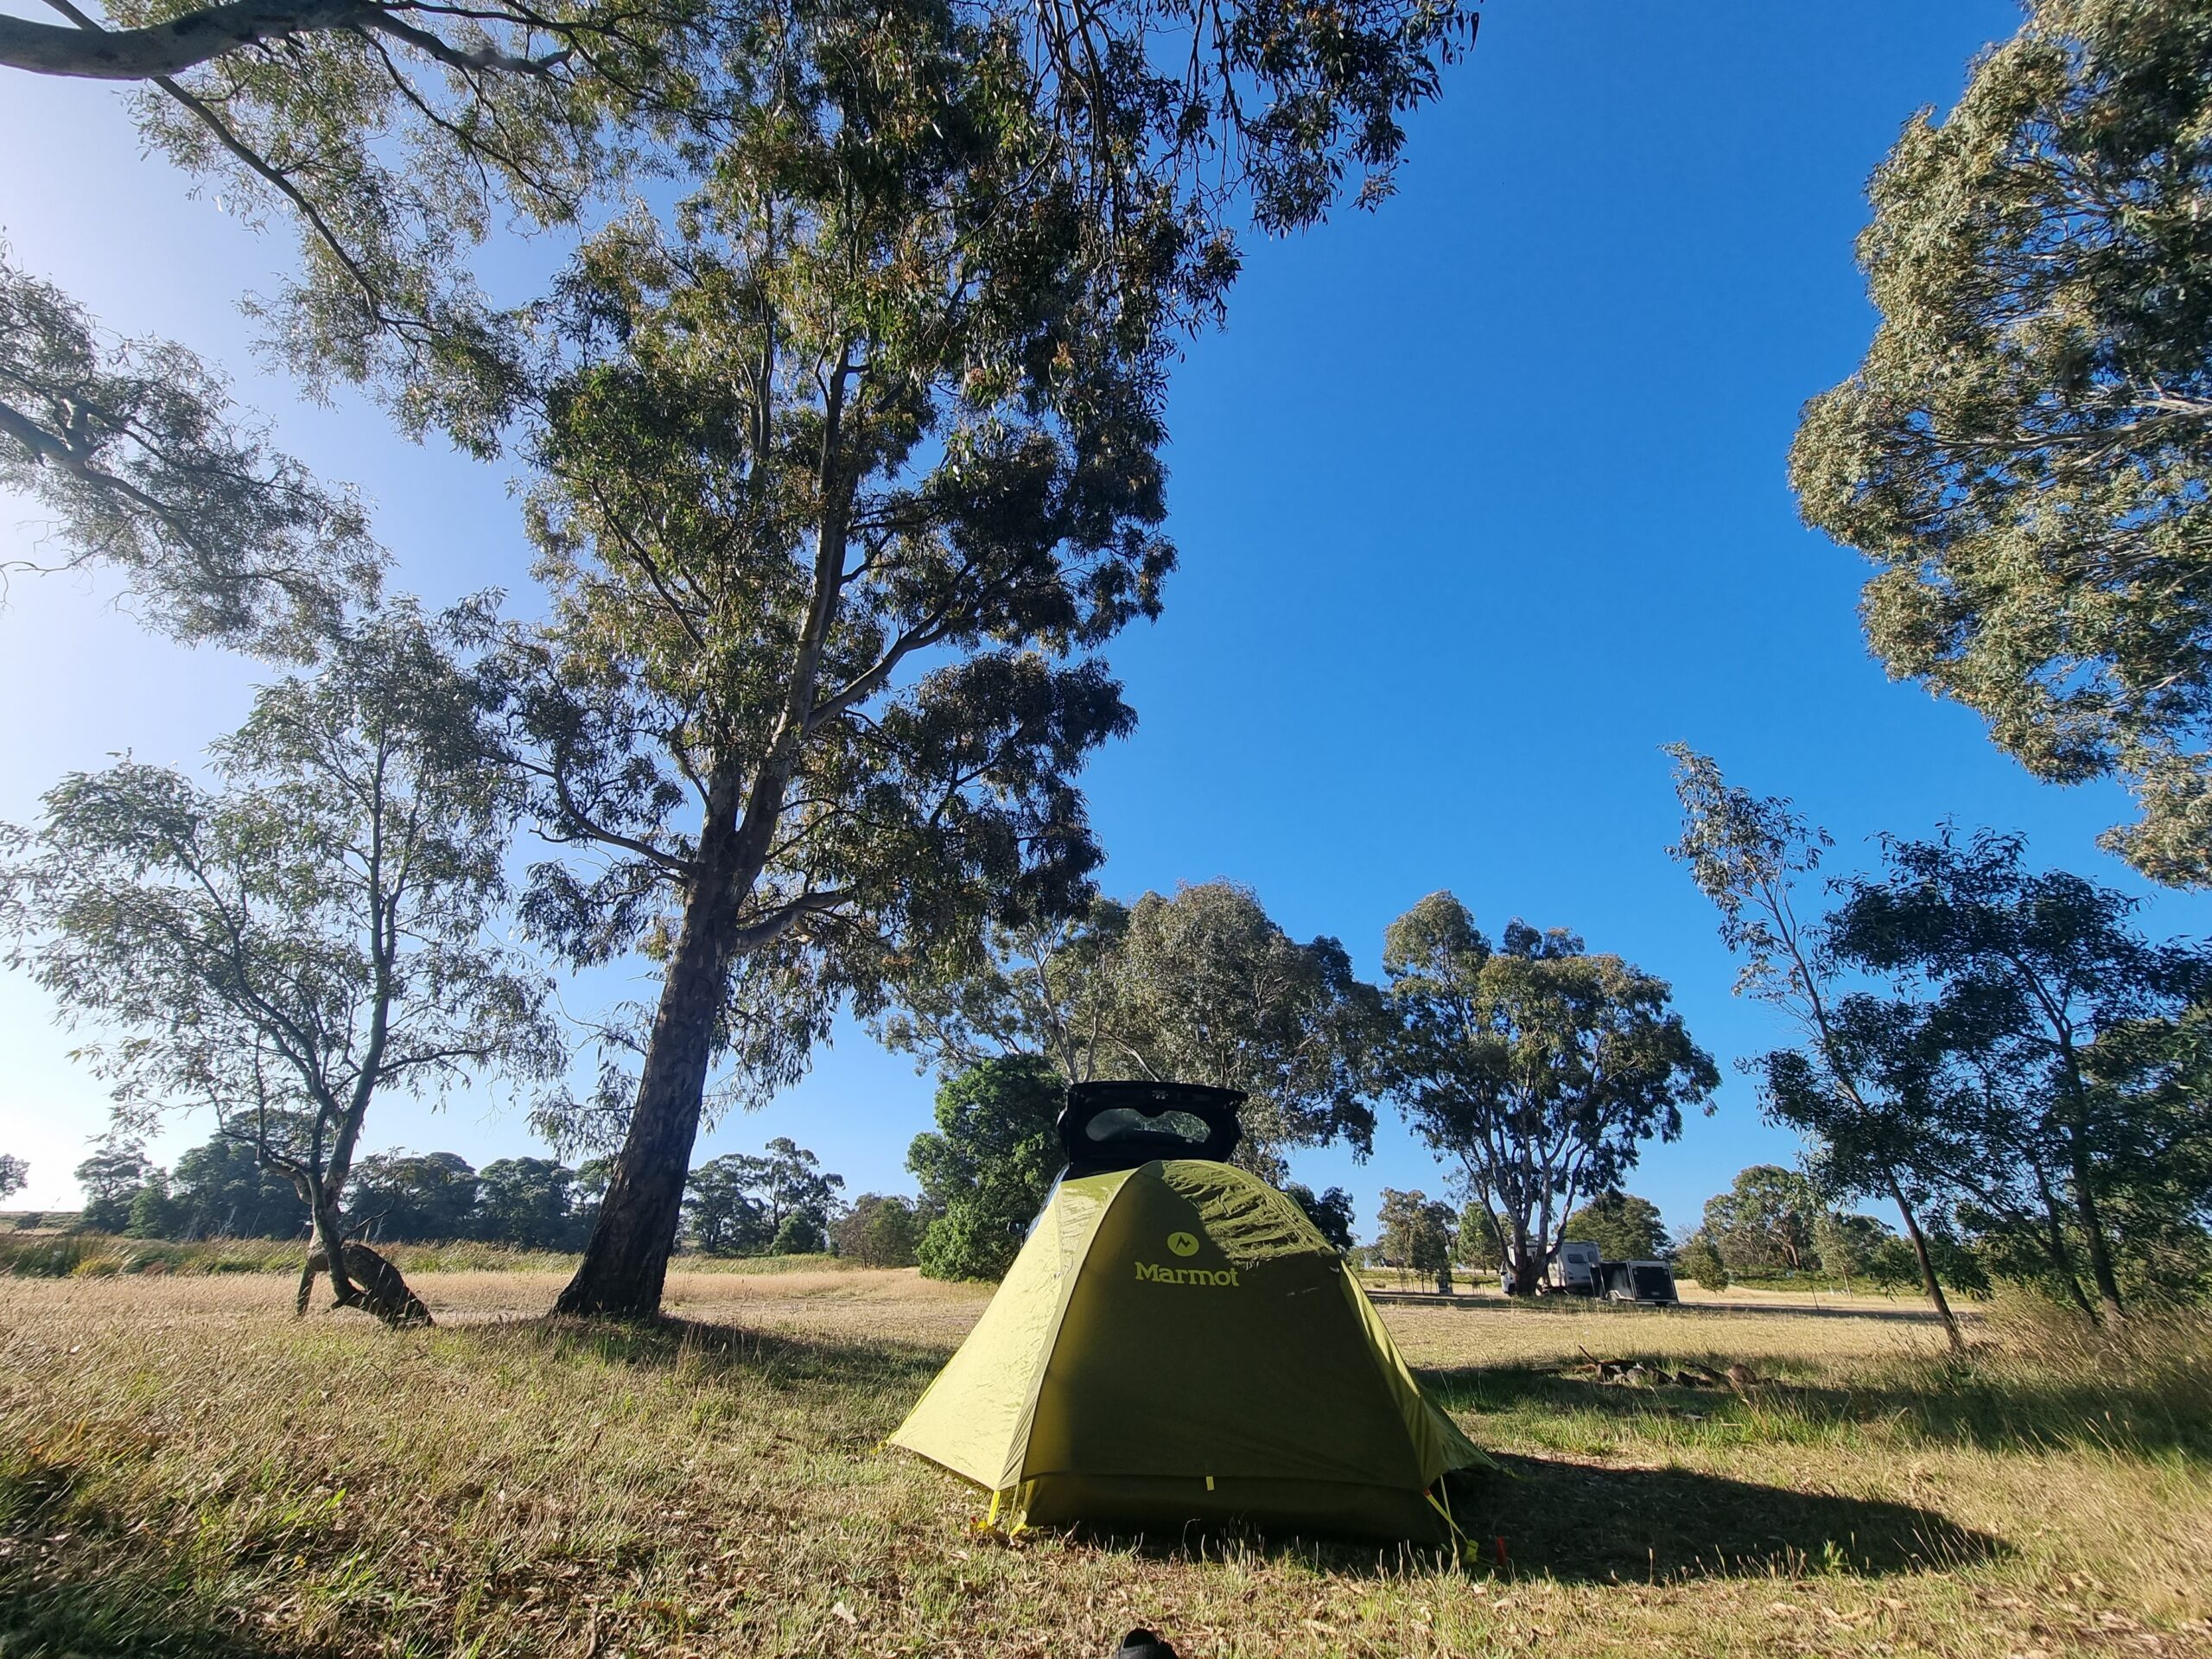 Kangaroo highway: A journey through Australia’s Christmas landscape